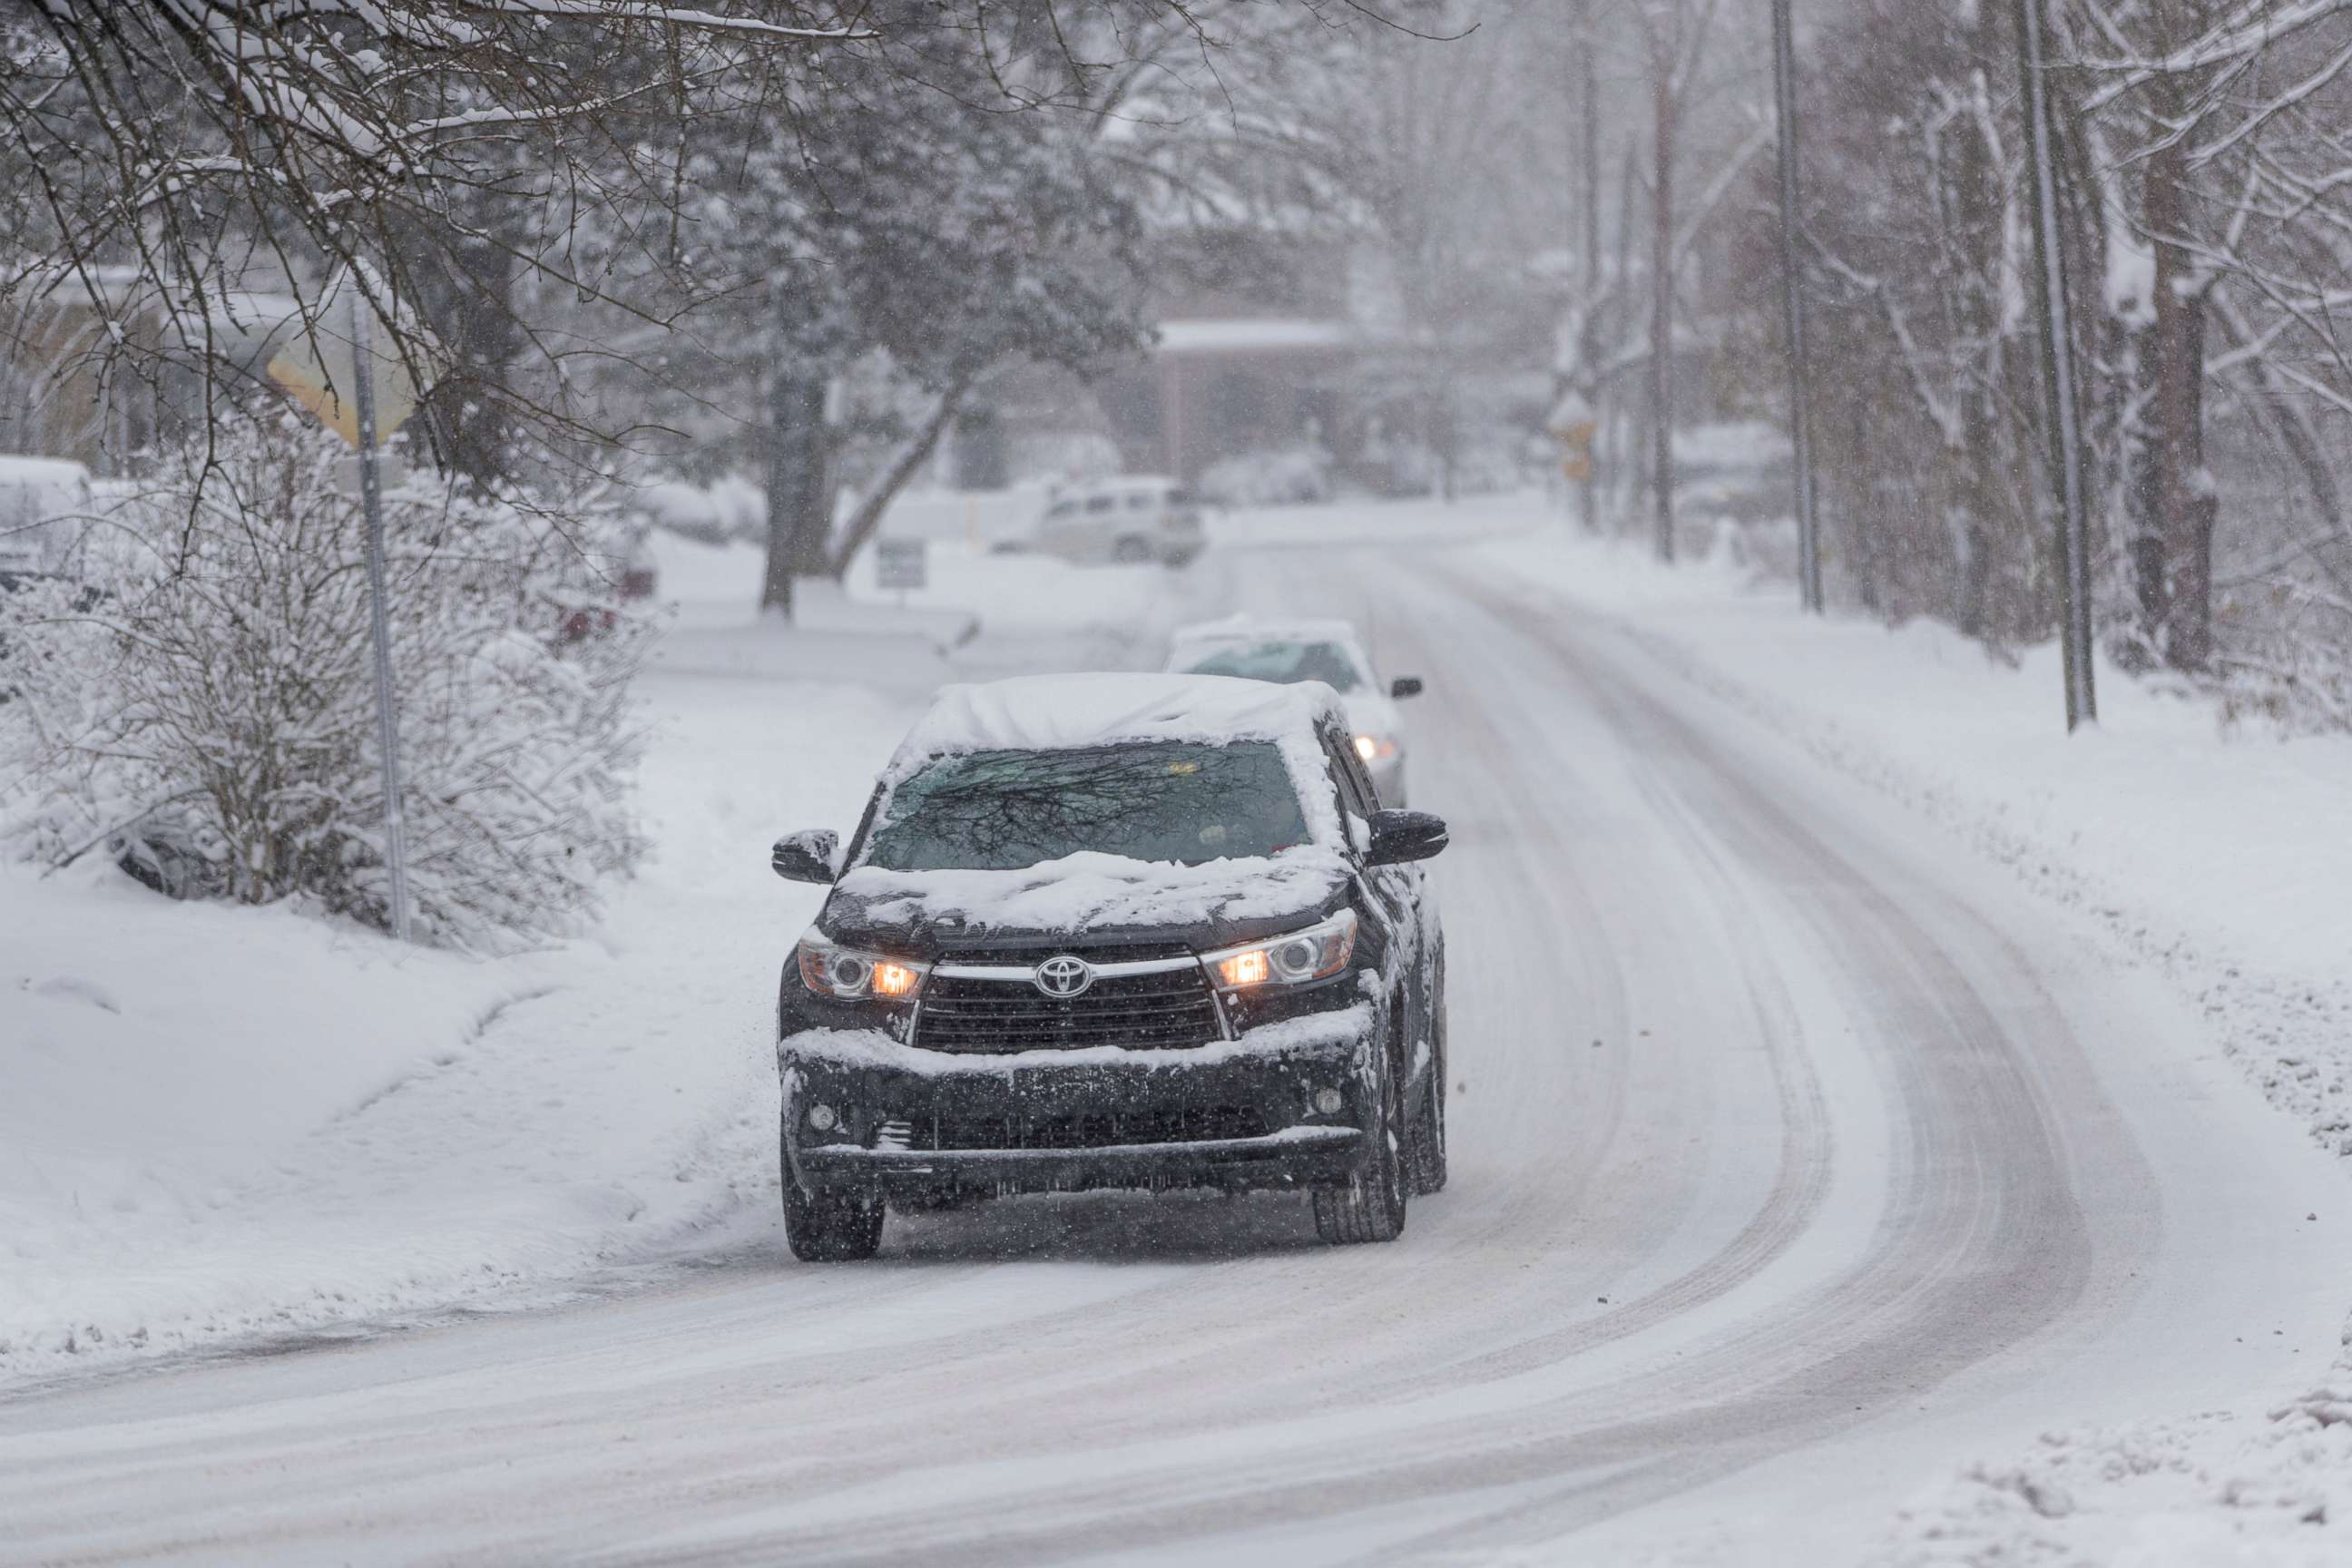 PHOTO: Vehicles travel across snow covered roads near Ritter Park on Friday, Dec. 25, 2020, in Huntington, W.Va.